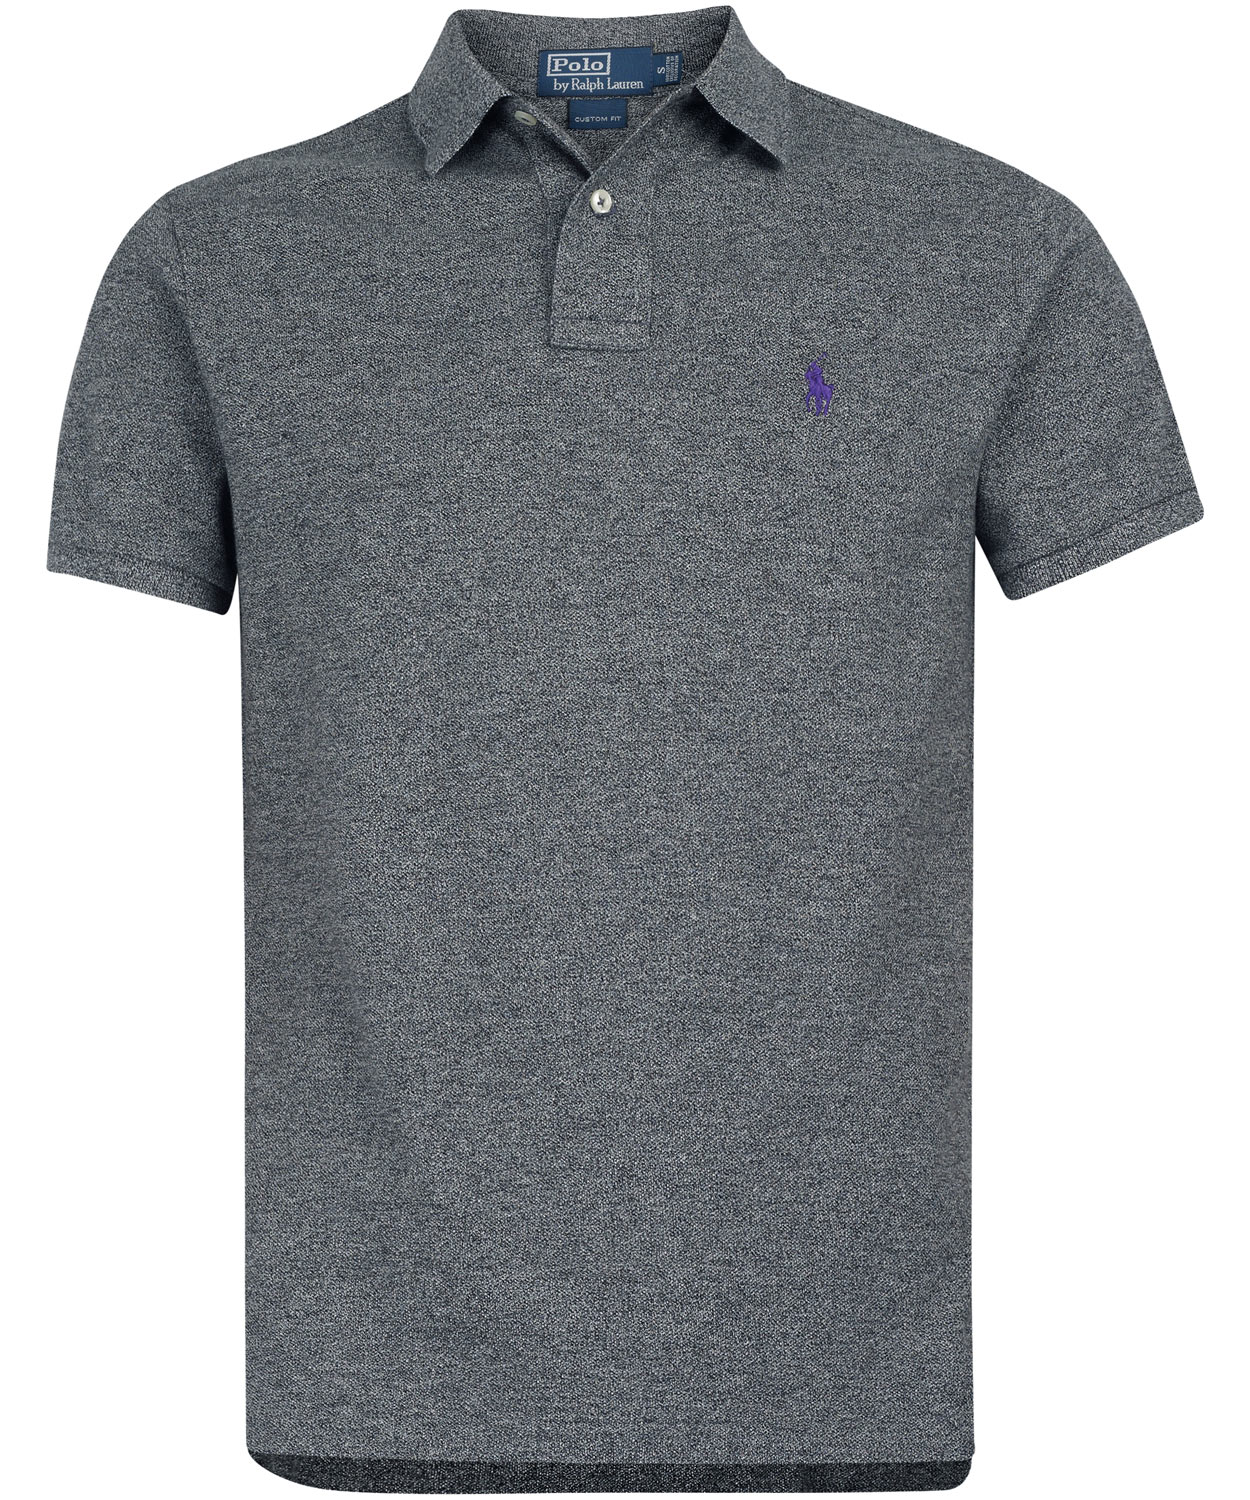 Lyst - Polo ralph lauren Marl Grey Polo Shirt in Gray for Men